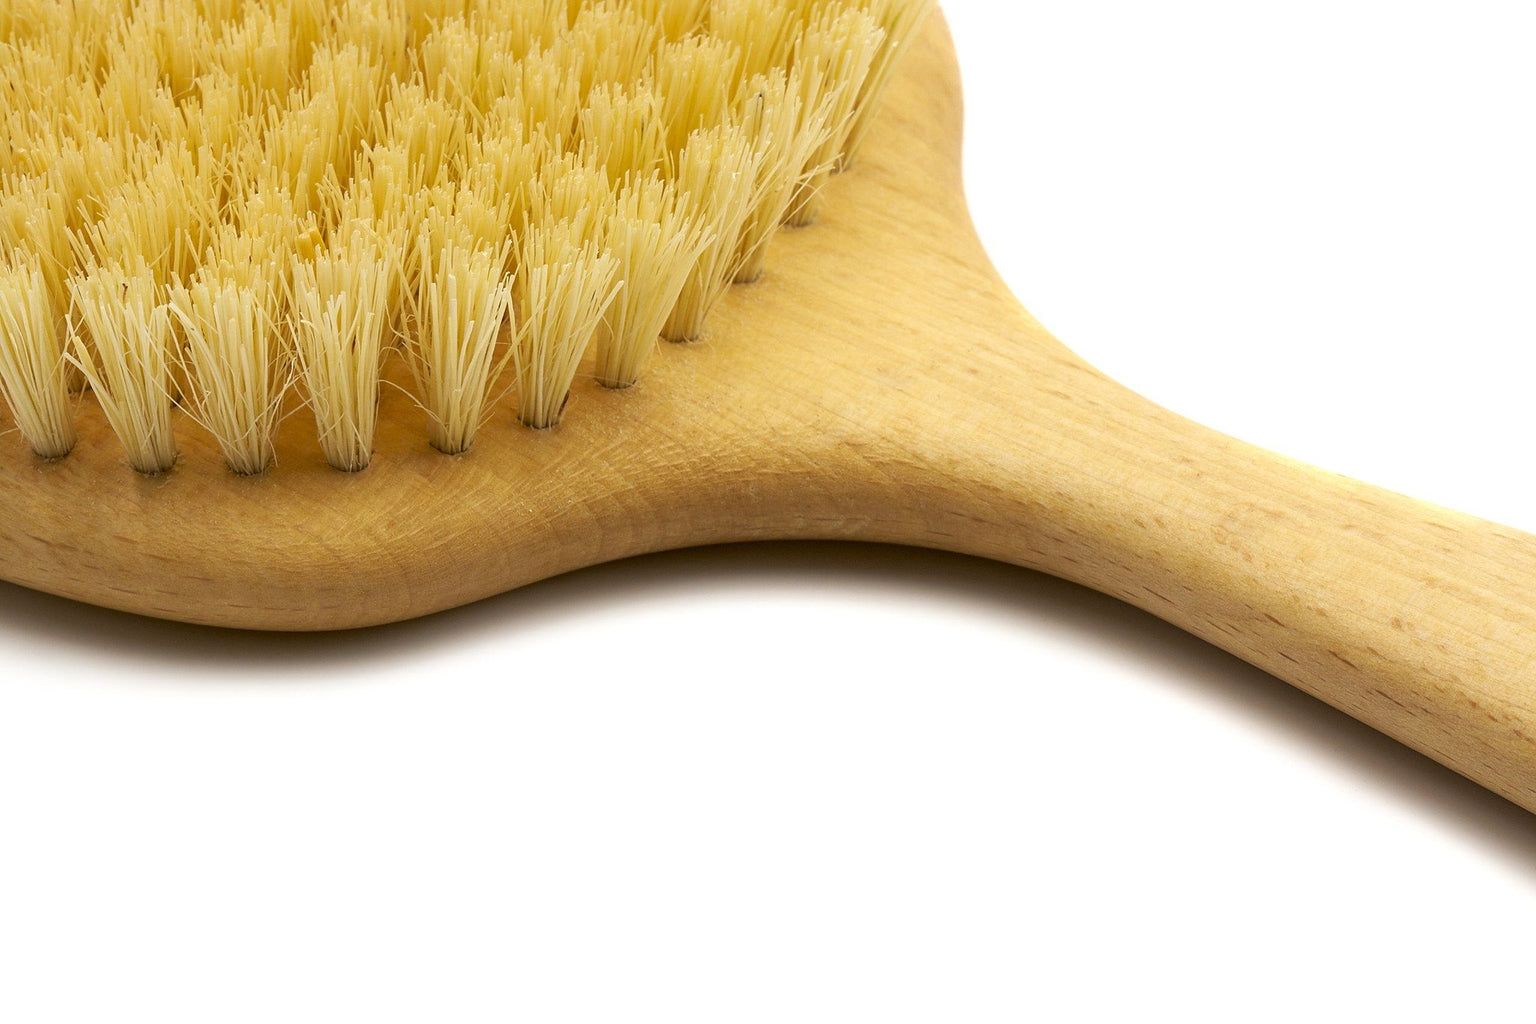 Pure Natural Beechwood Boar Bristle or Tampico Fiber Body Massage Brush - Made in Germany Body Brush Fendrihan 